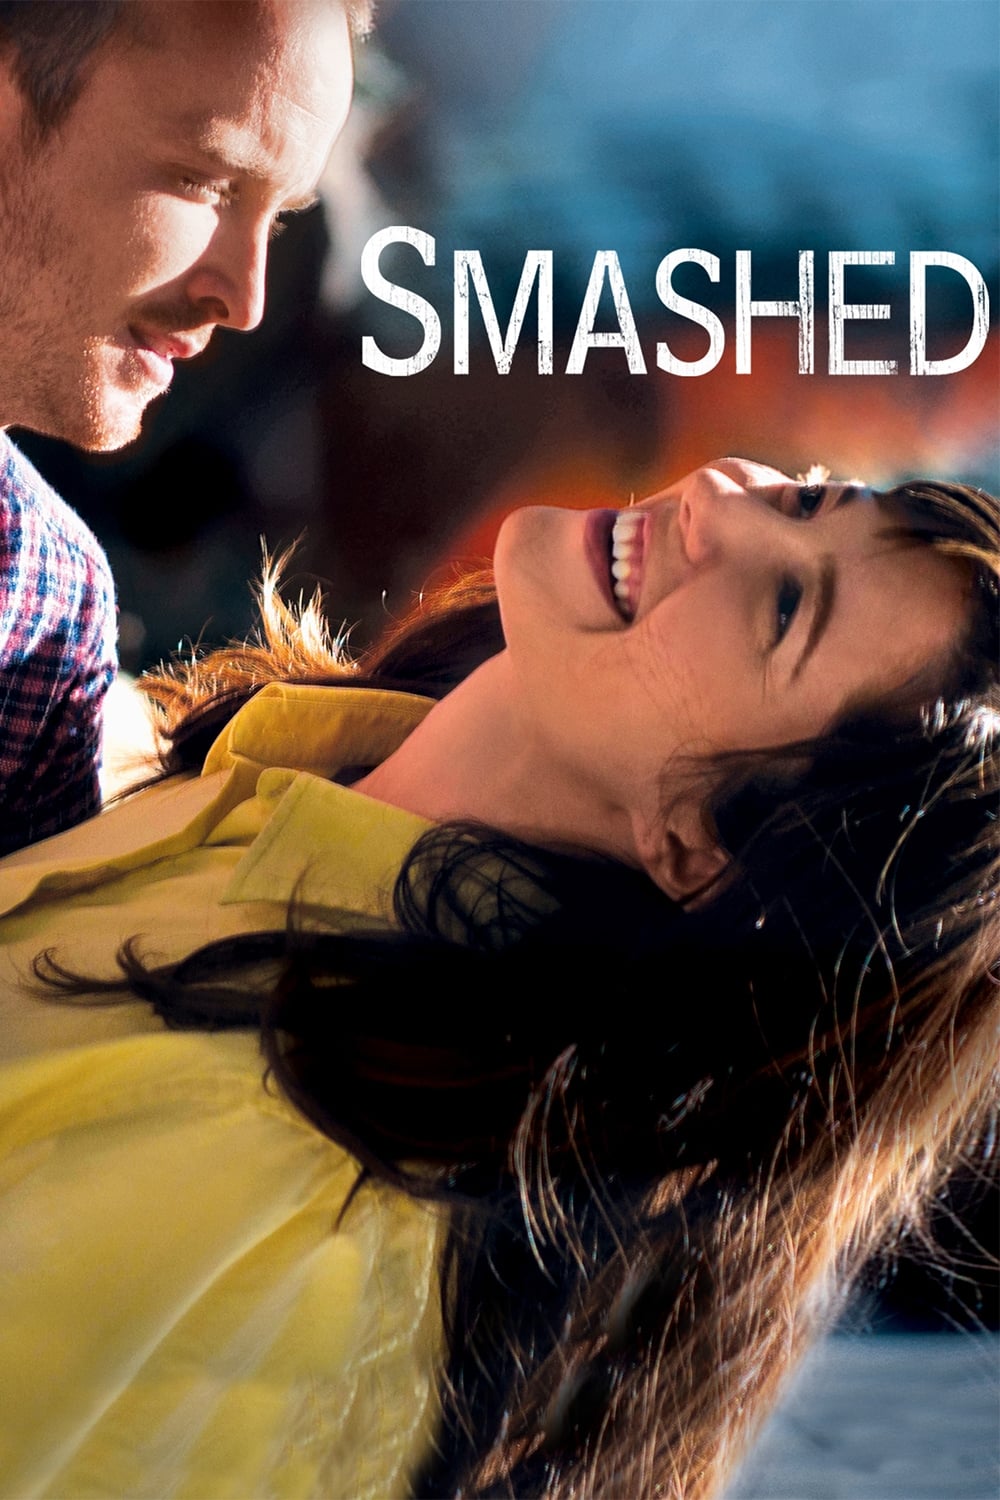 Smashed [HD] (2012)